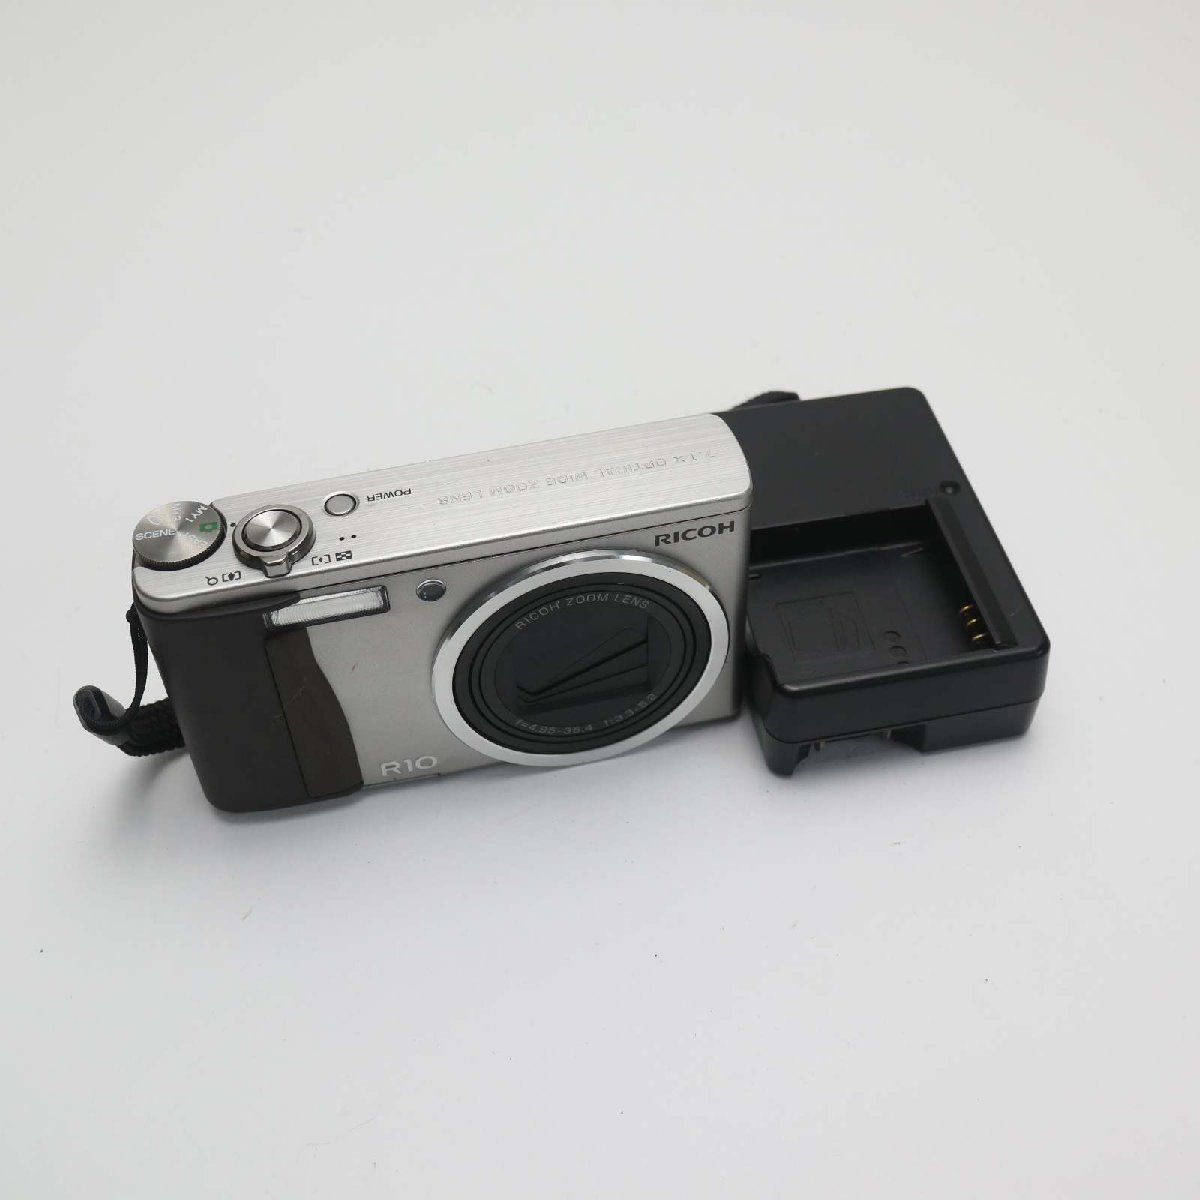 RICOH R10 デジカメ BLACK - デジタルカメラ